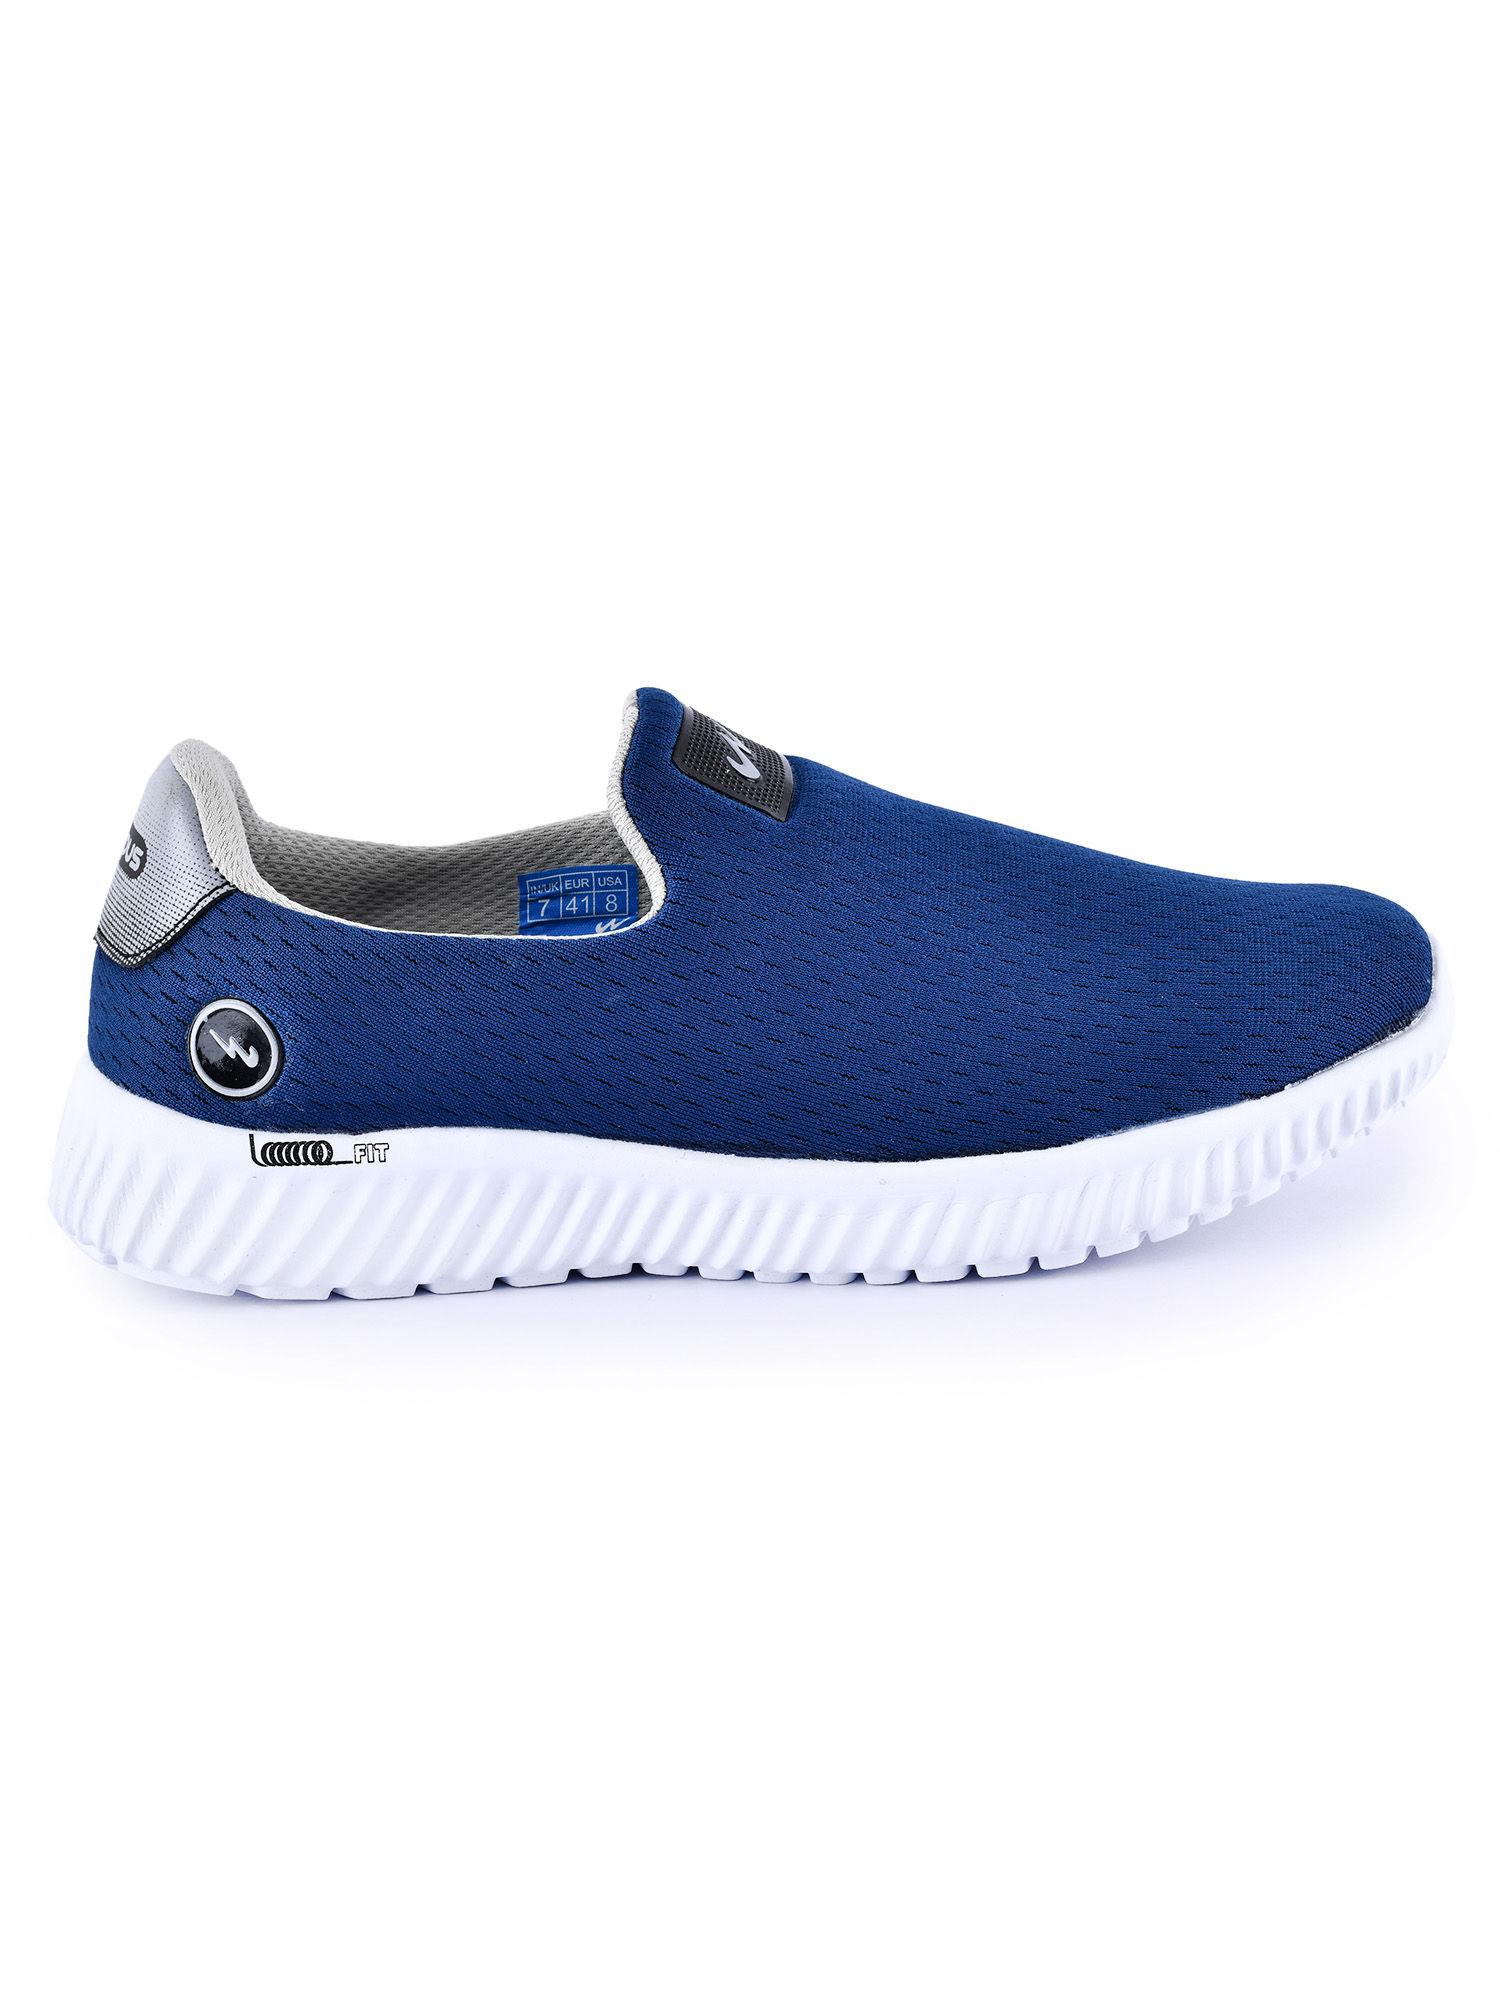 oxyfit-blue-casual-shoes-for-men